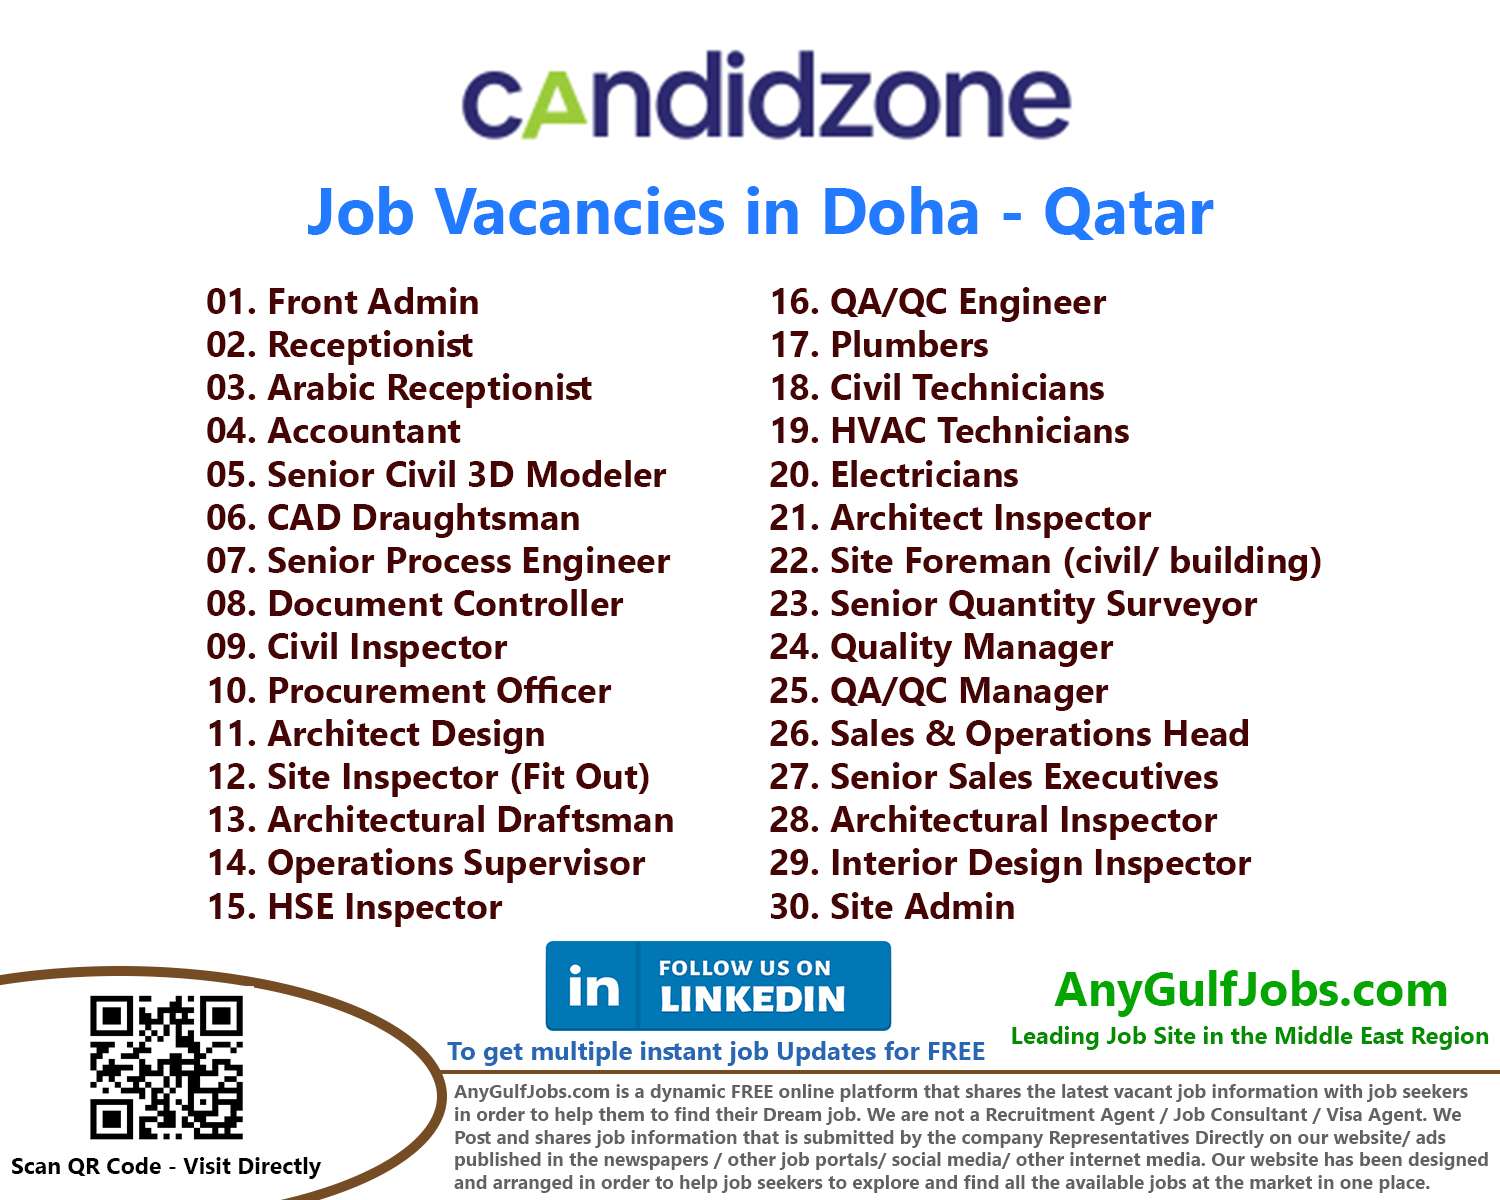 Candidzone Job Vacancies - Doha, Qatar